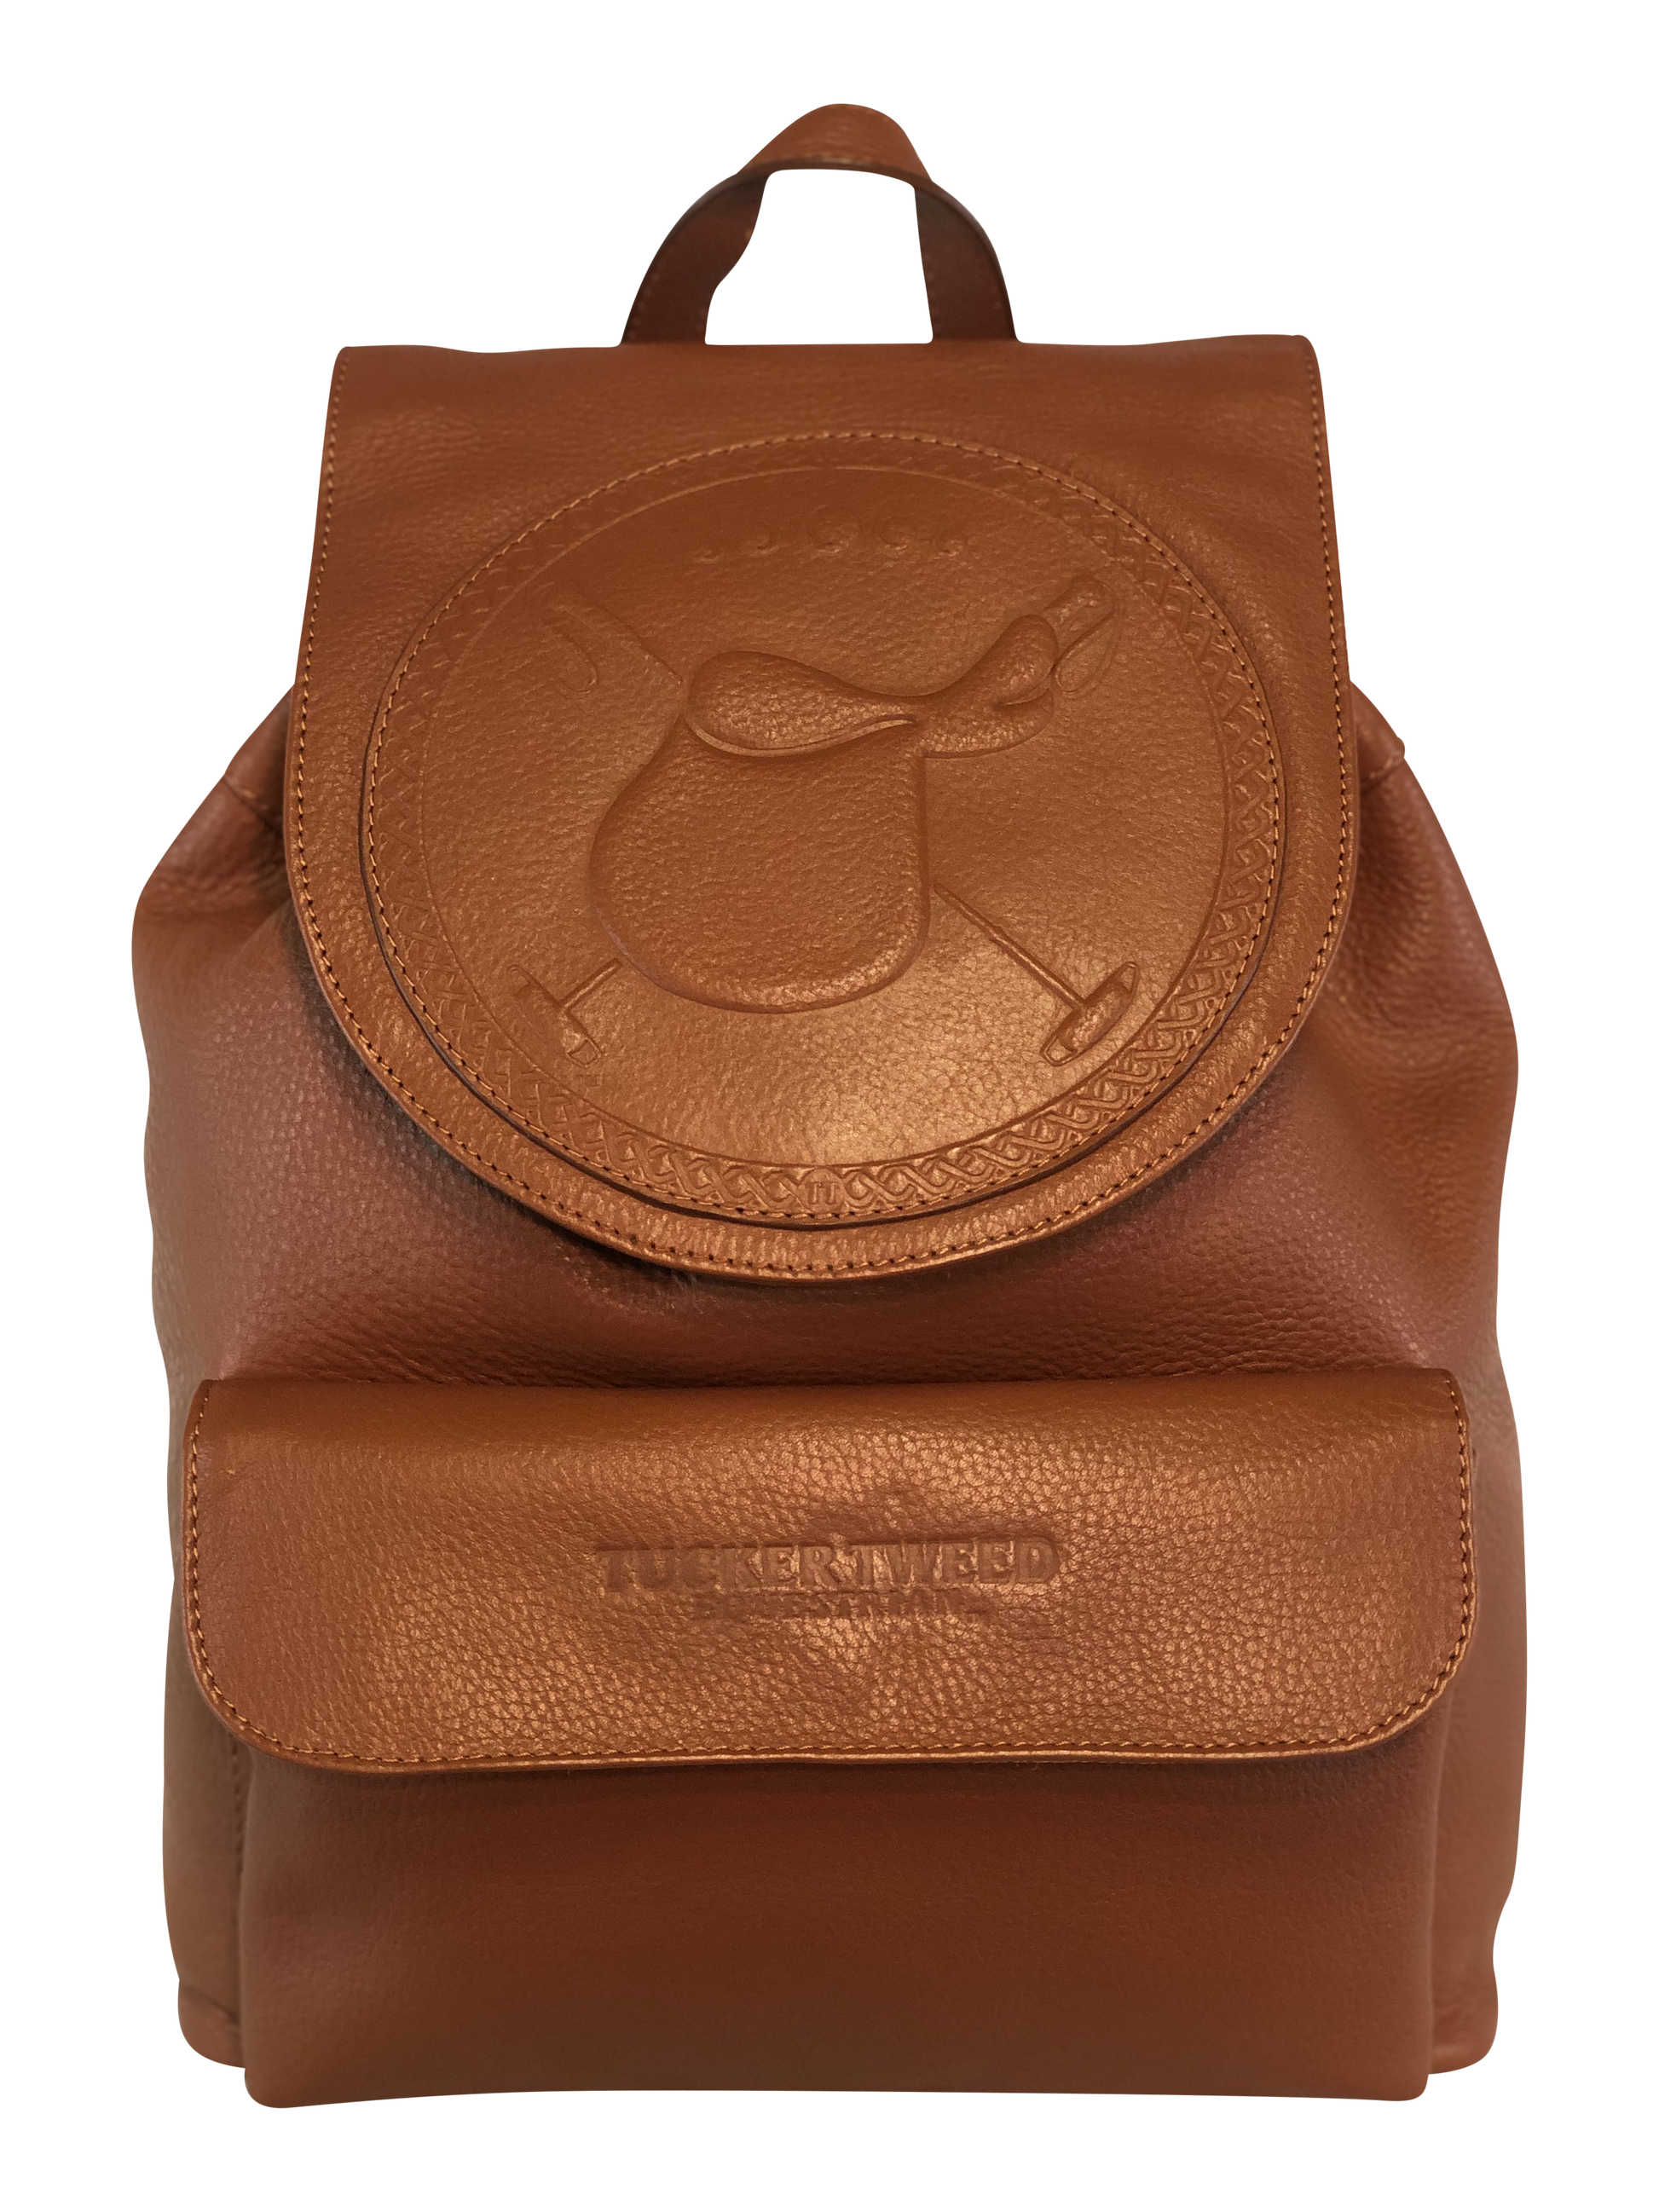 Tucker Tweed Equestrian Leather Handbags Polo Chestnut Brandywine Backpack: Polo